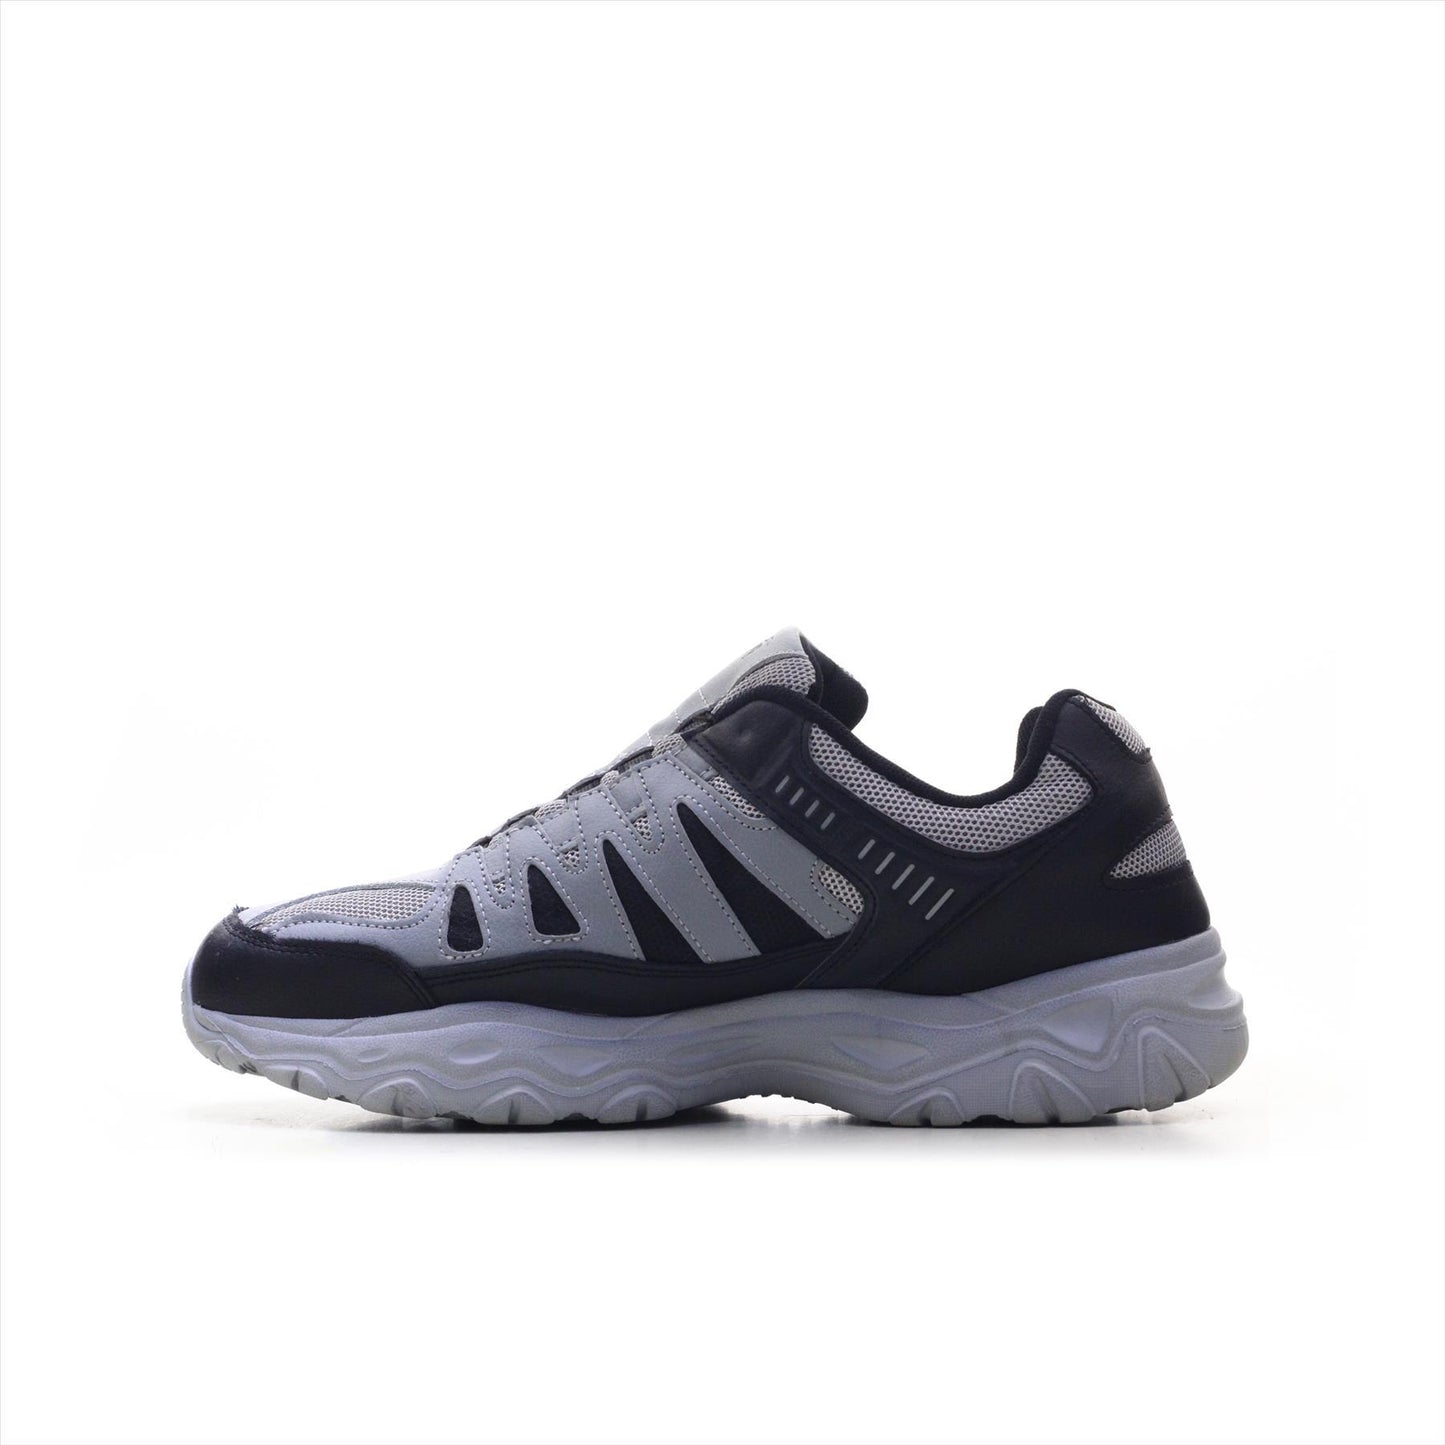 Avia Black Running Shoes Enduropro Athletic Sneakers Comfort Mens